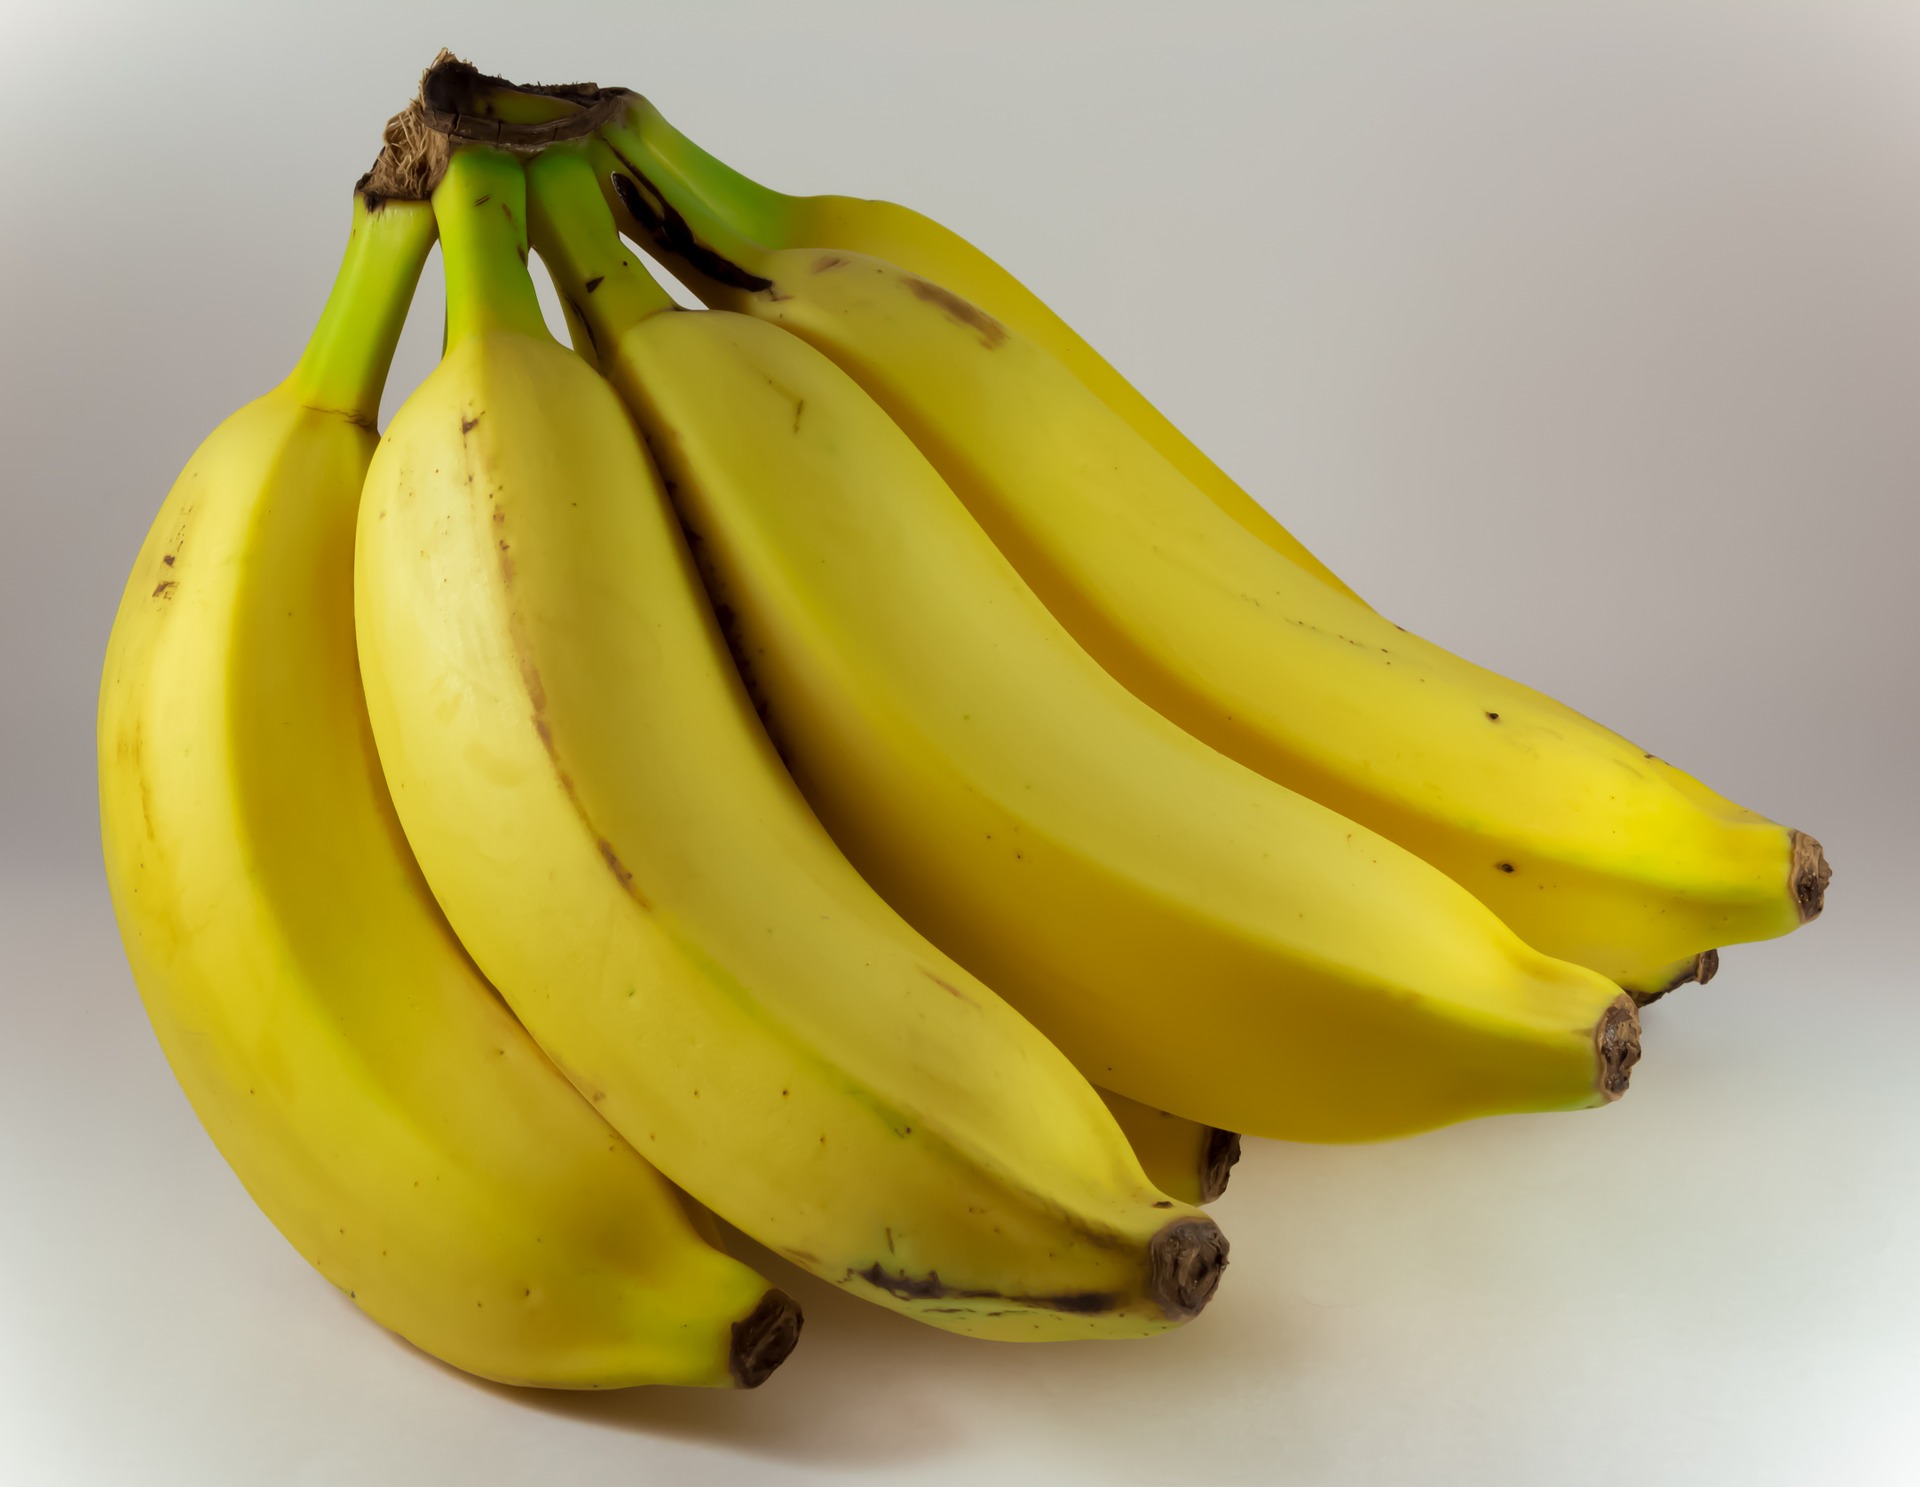 Weekly Economic News Roundup and banana worries